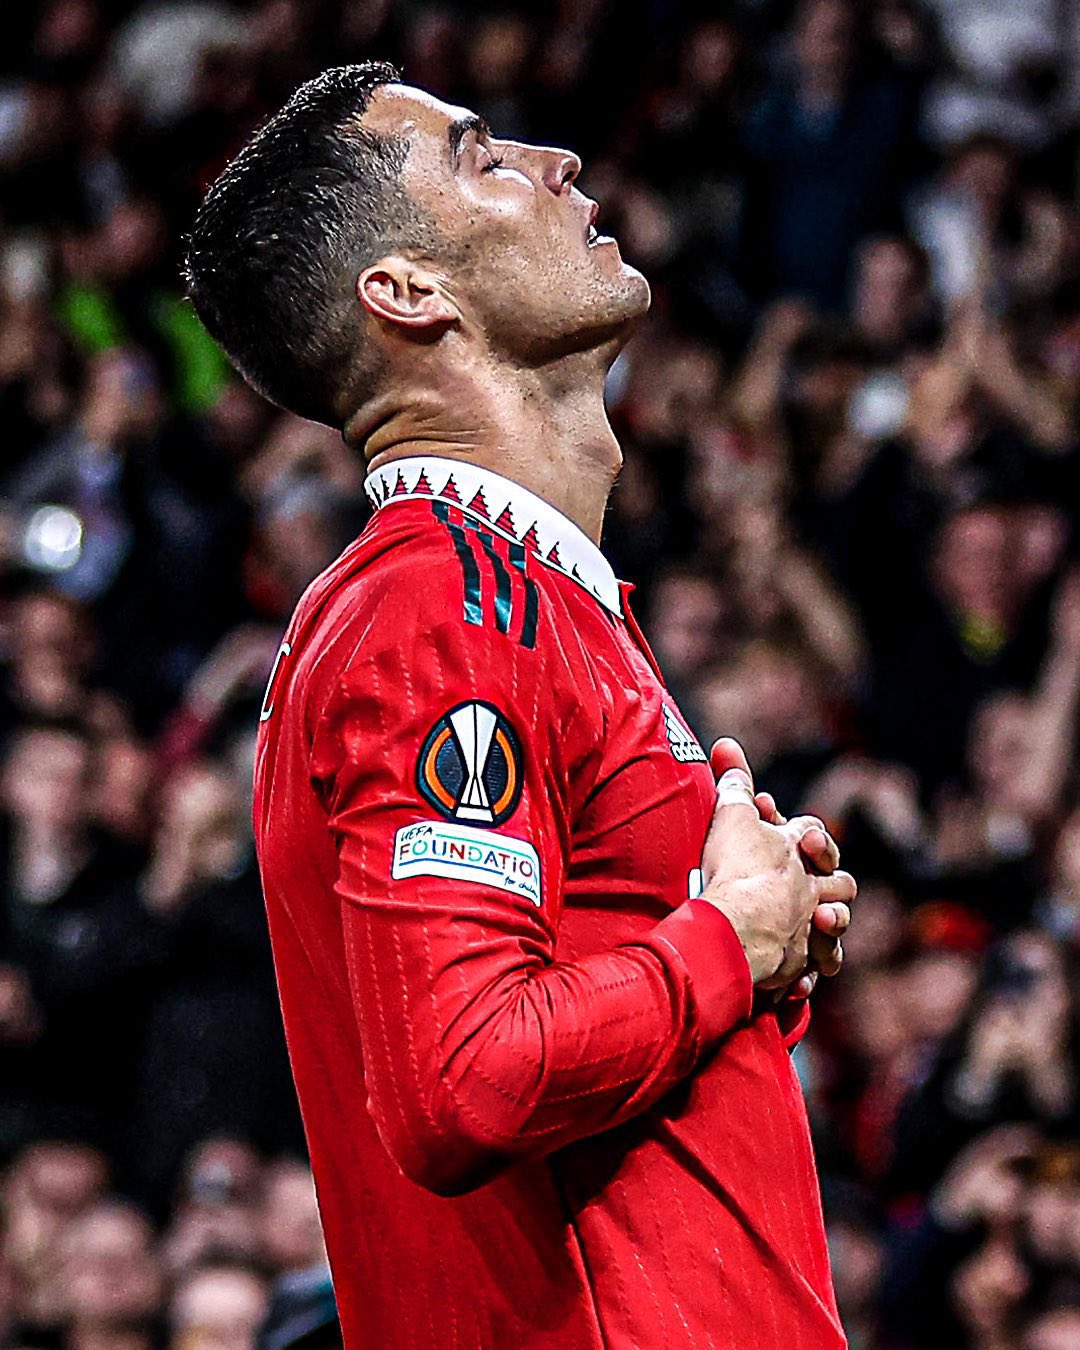 MUIP on X: Cristiano Ronaldo dey bring that drip 💧 #DareToDream